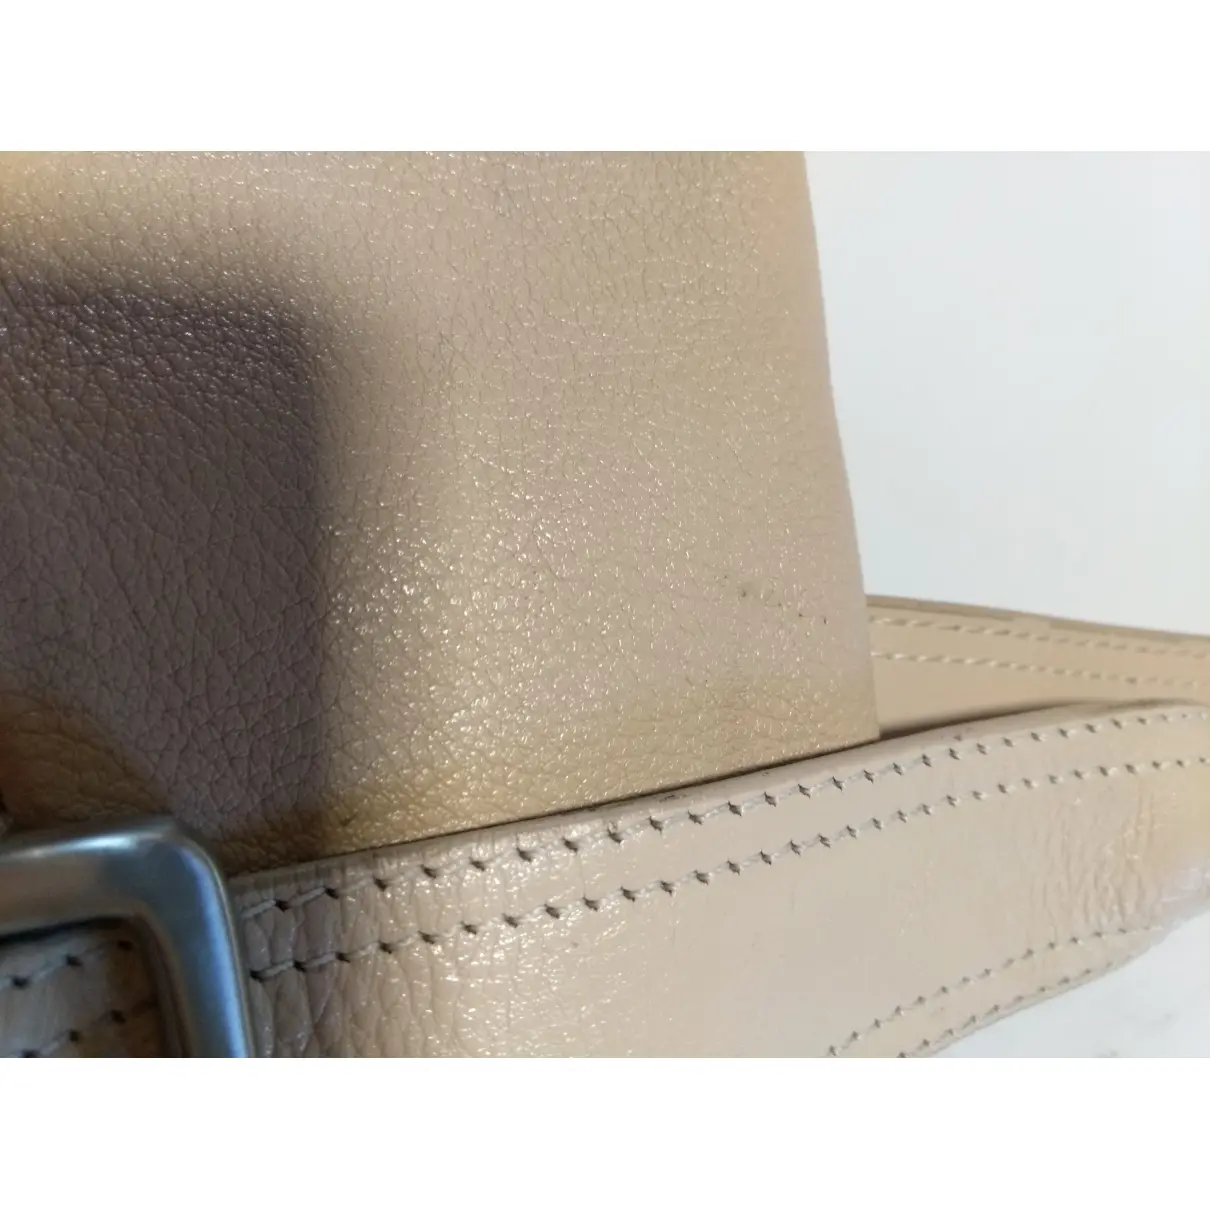 Leather handbag Kenneth Cole